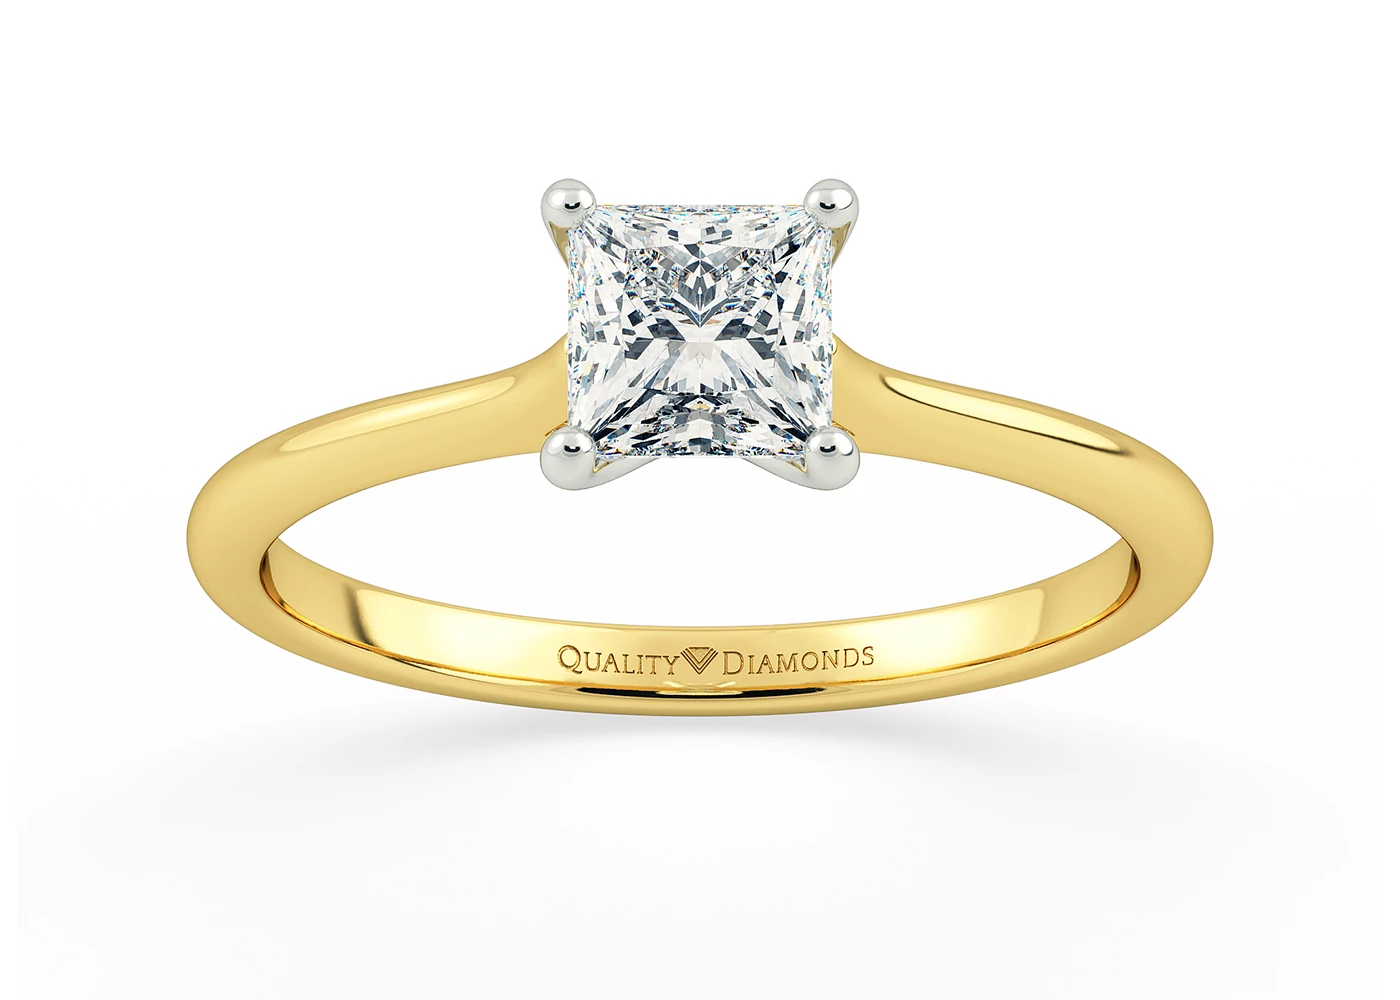 Princess Adamas Diamond Ring in 18K Yellow Gold